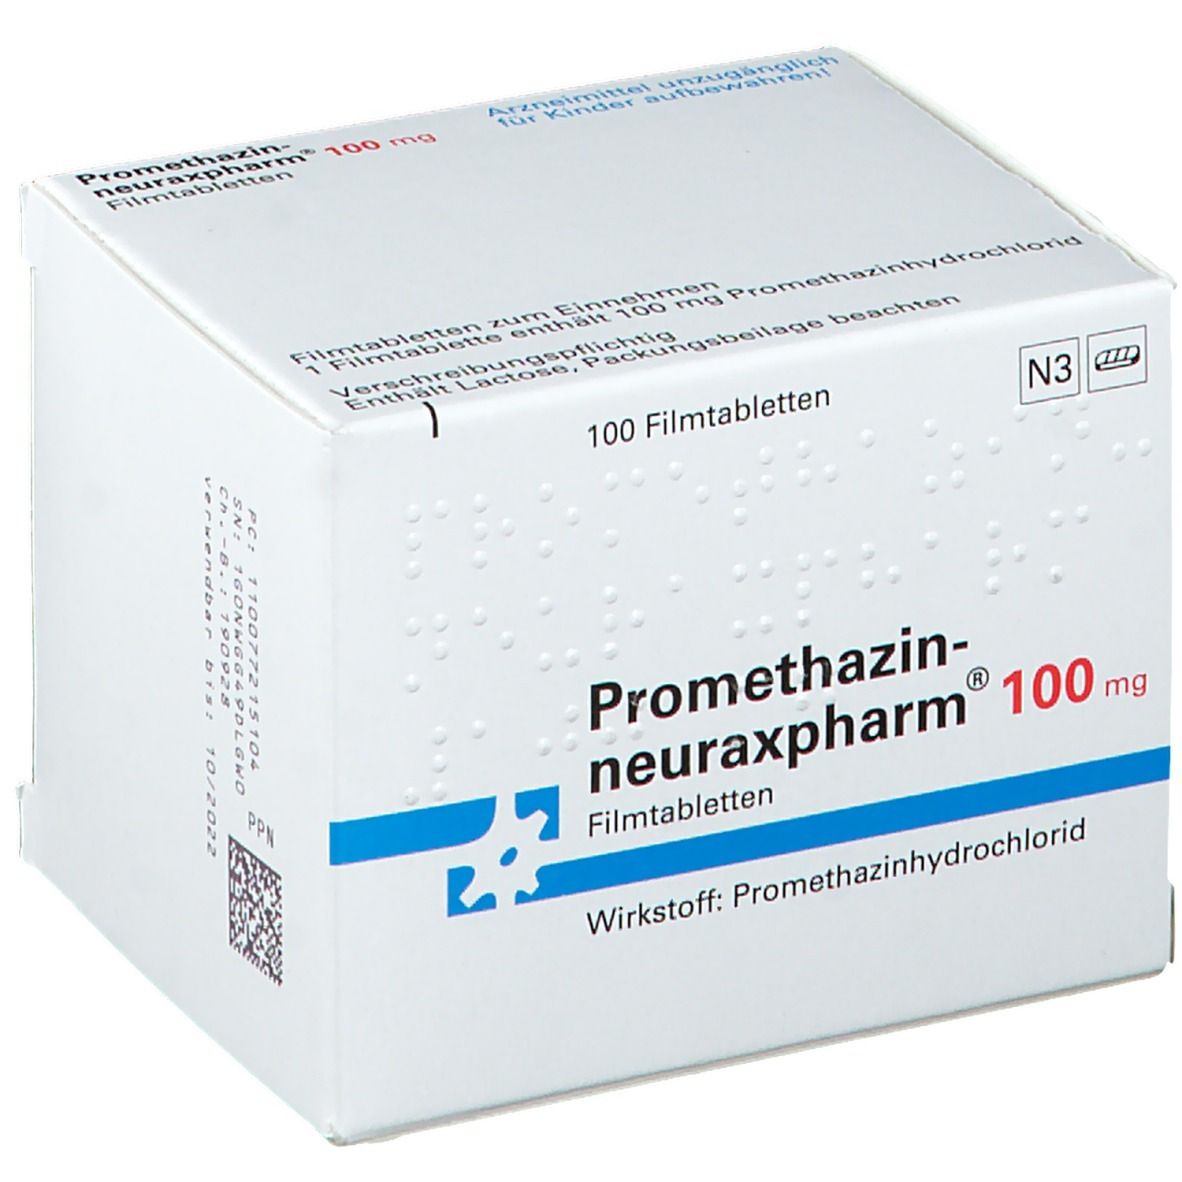 Promethazin-neuraxpharm® 100 mg